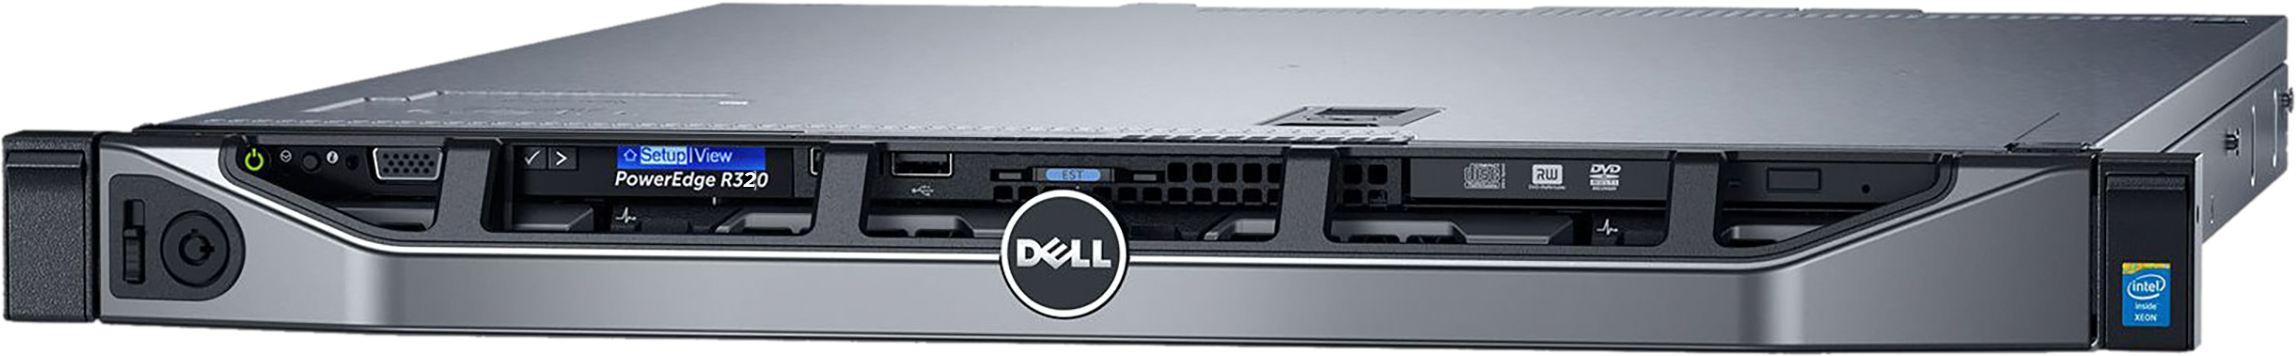 Аренда физического сервера DELL R320 / E5-2420 v2 / 8 GB RAM / 2 × 240 GB SSD / 2 × 1 TB HDD / H310